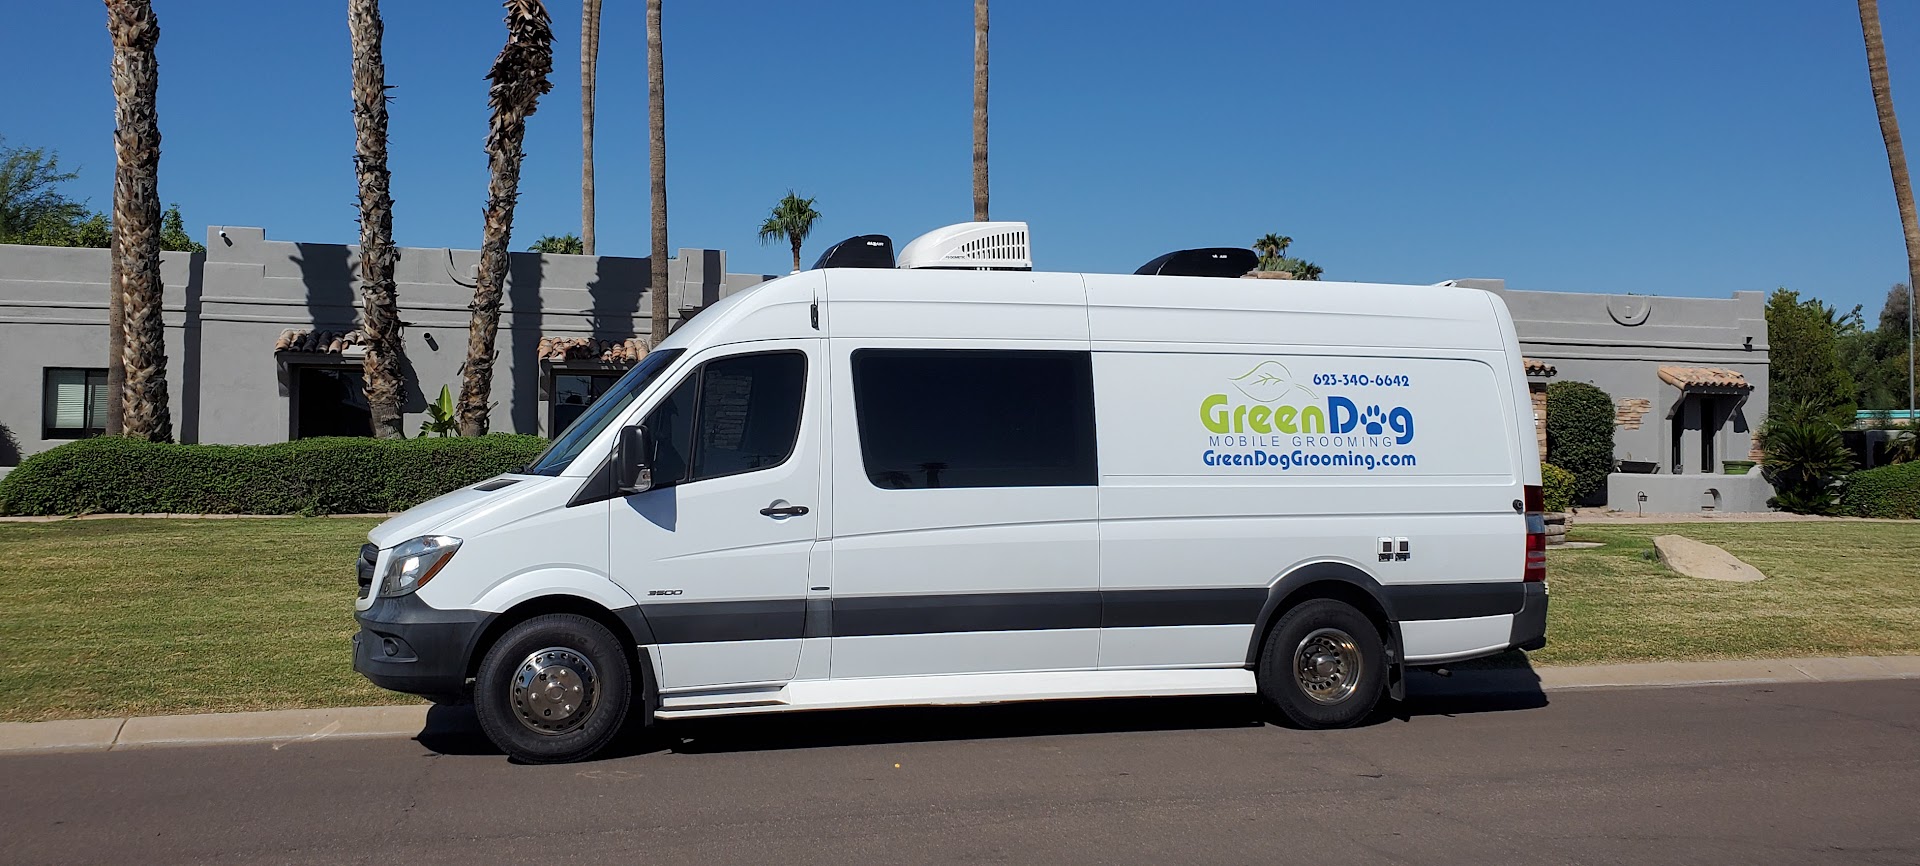 Green Dog Mobile Grooming